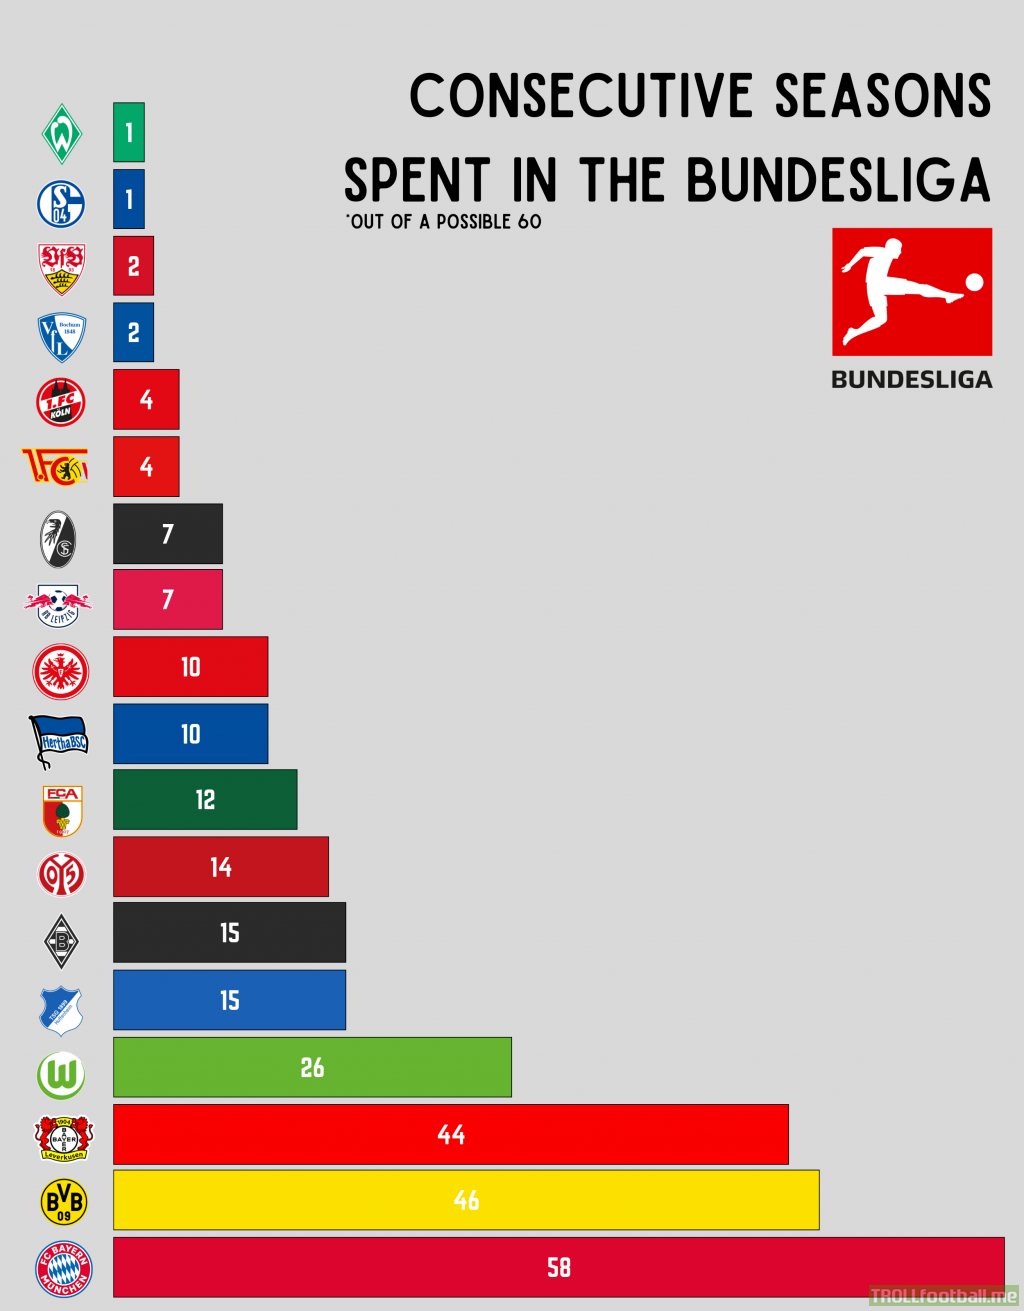 [OC] Consecutive Seasons Spent in the Bundesliga